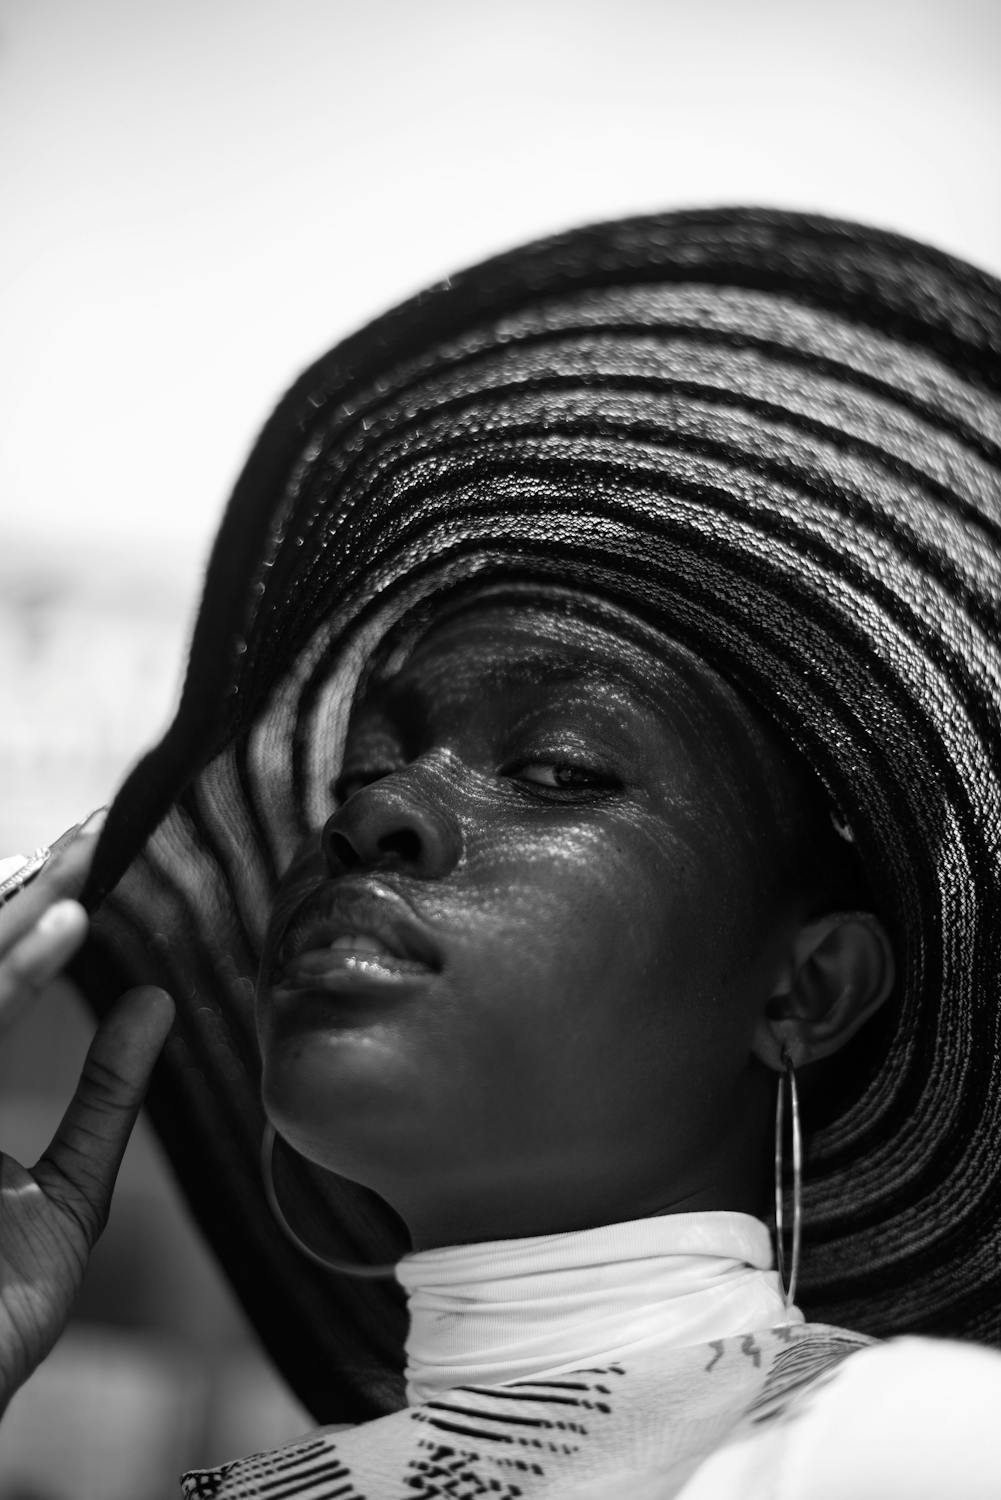 Stylish black woman in hat · Free Stock Photo